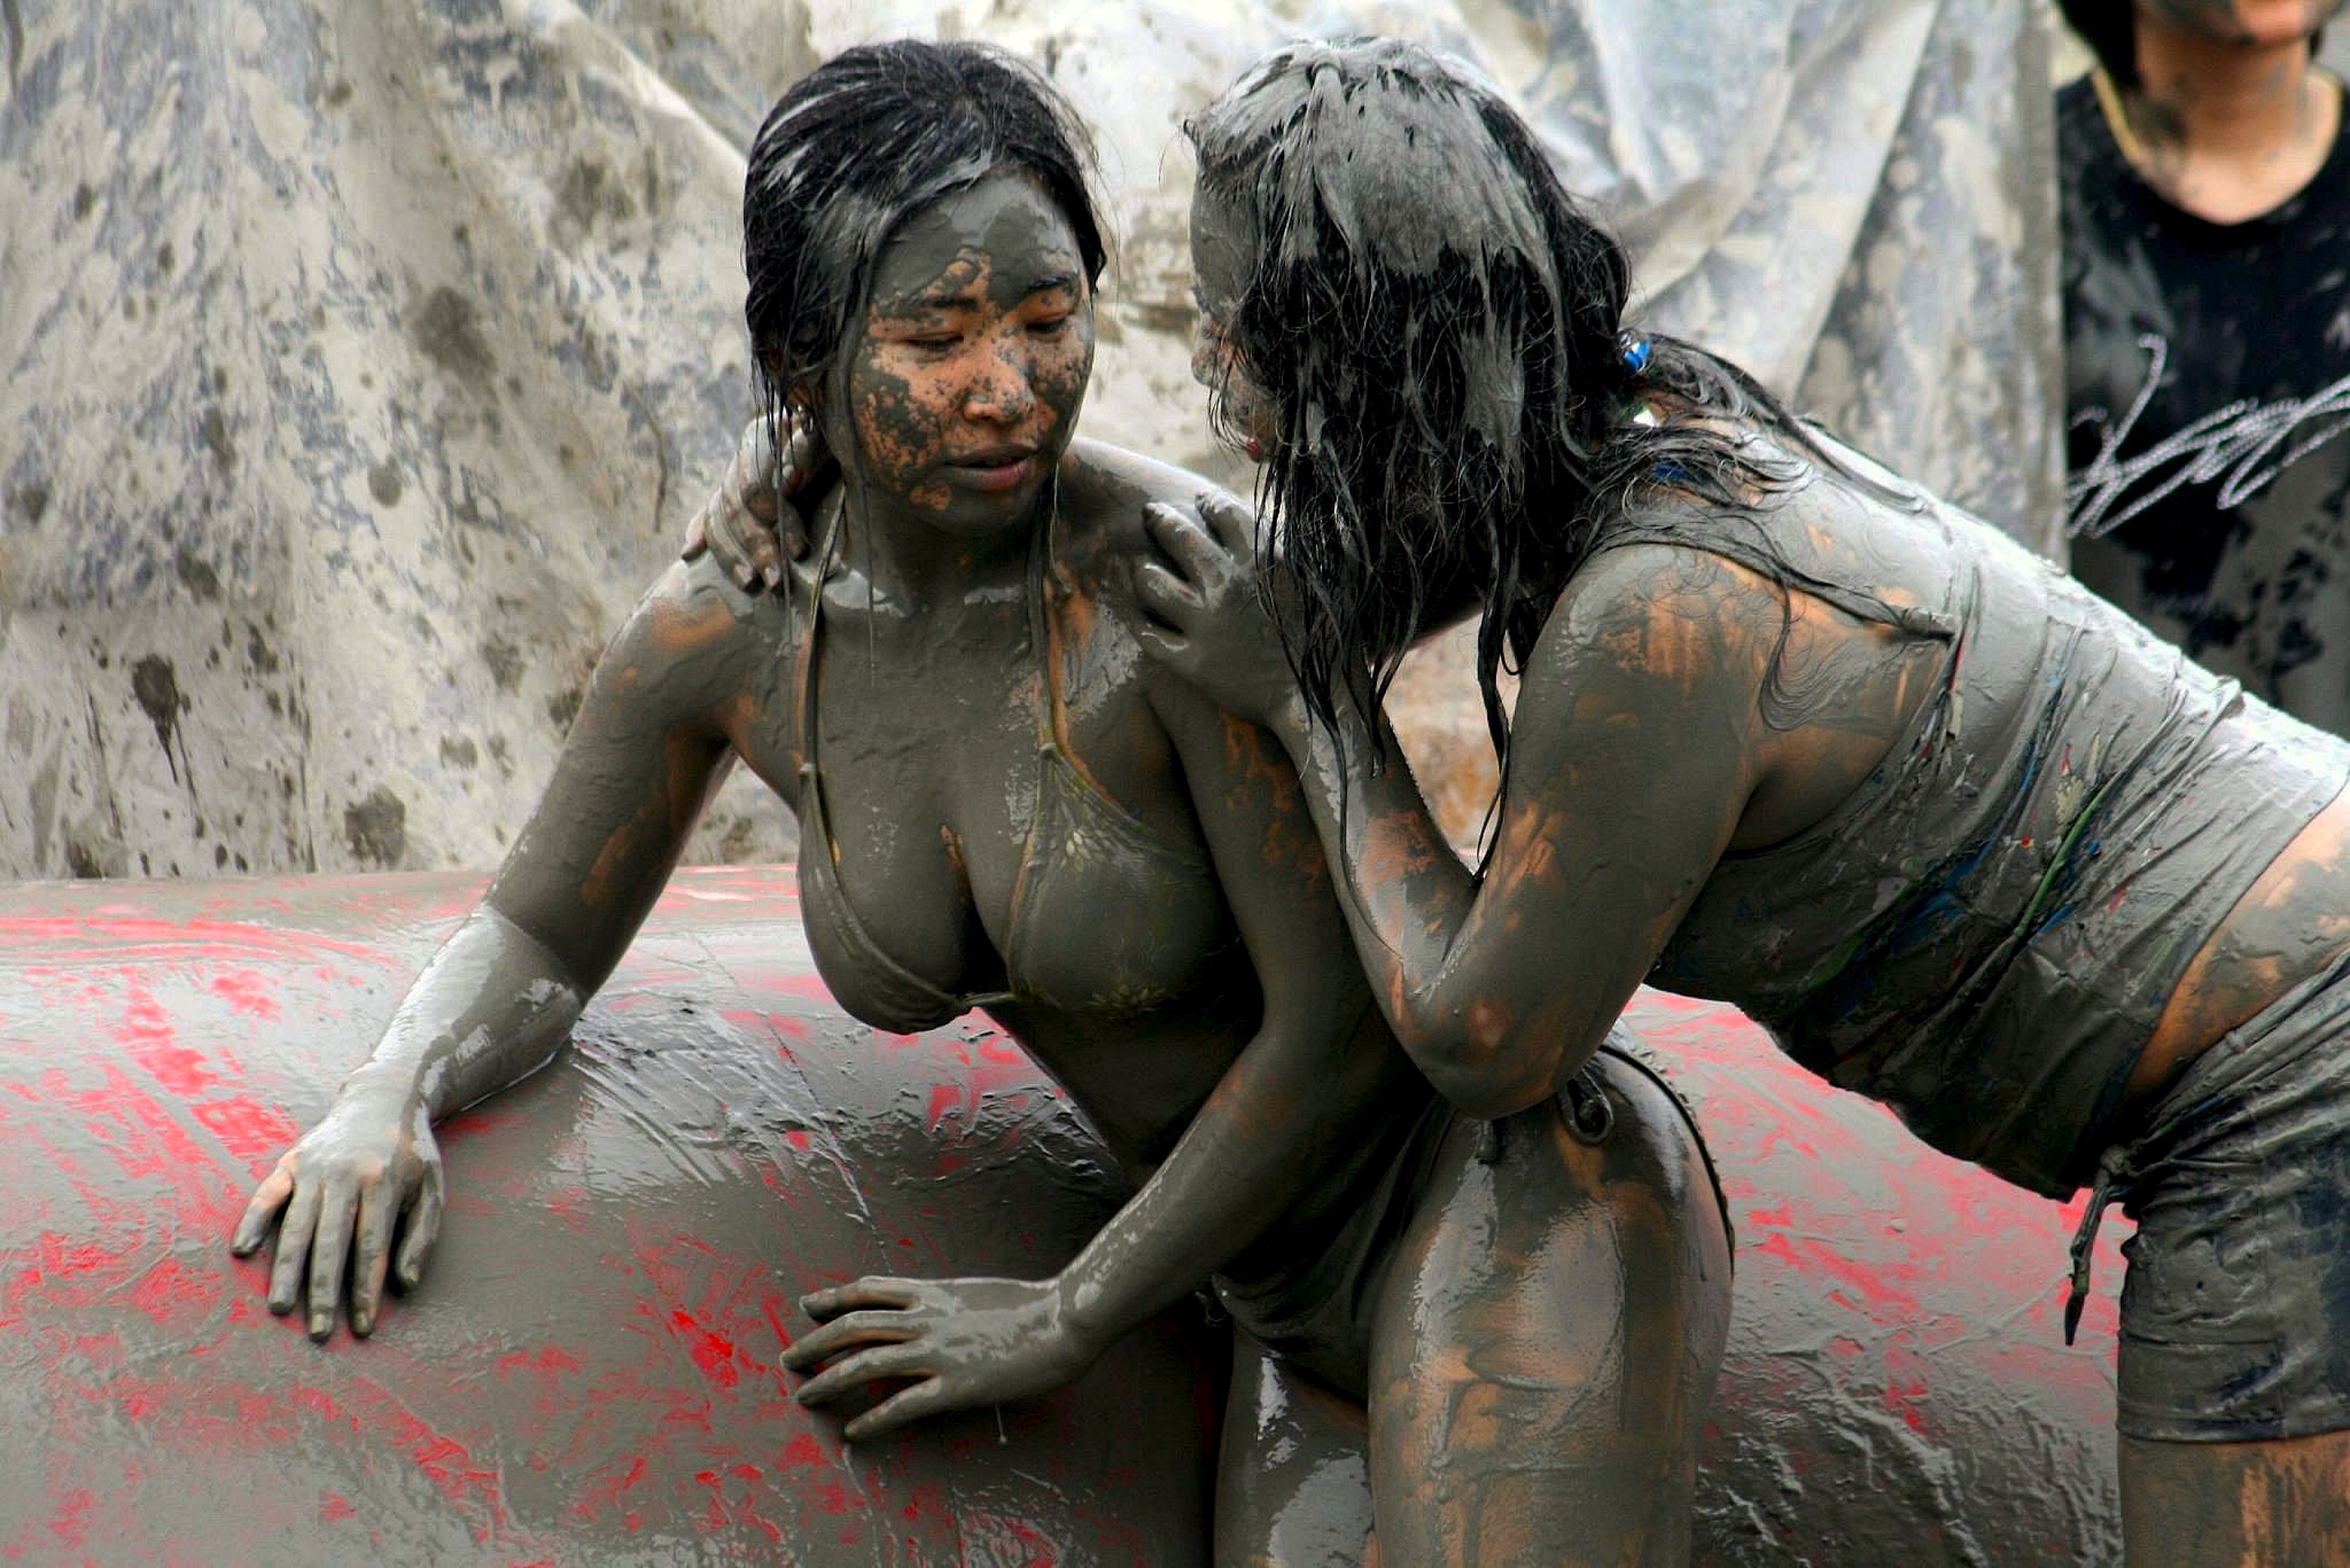 Dirty sarah. Девушки в грязи купаются.